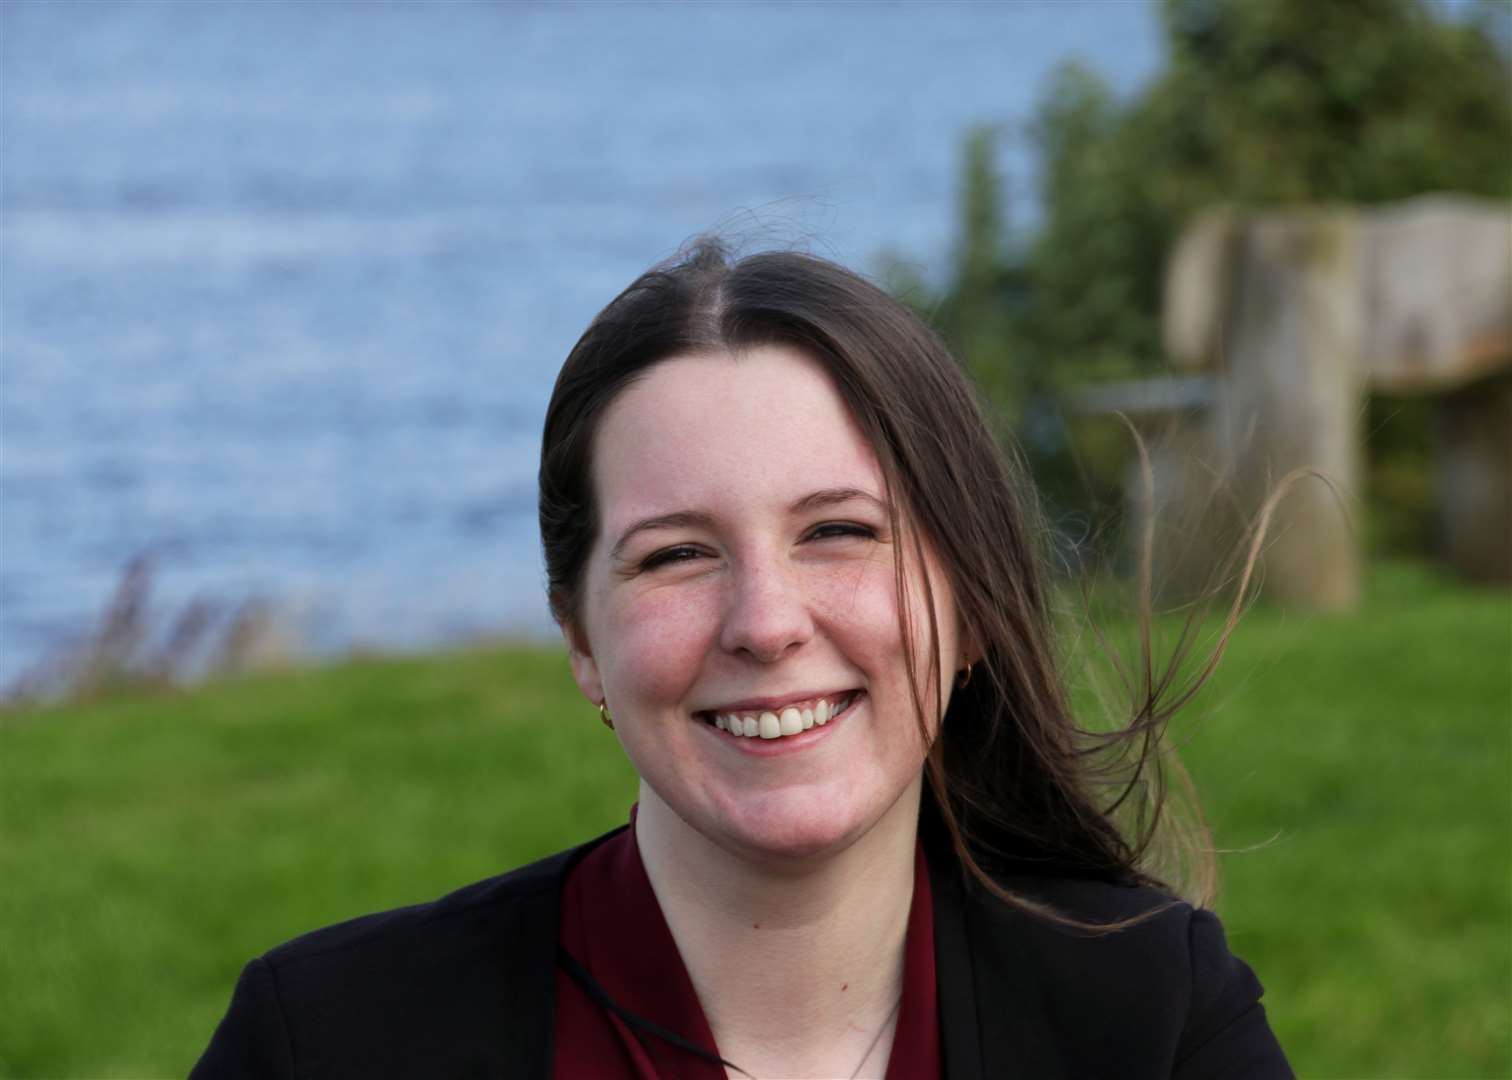 SNP candidate Emma Roddick